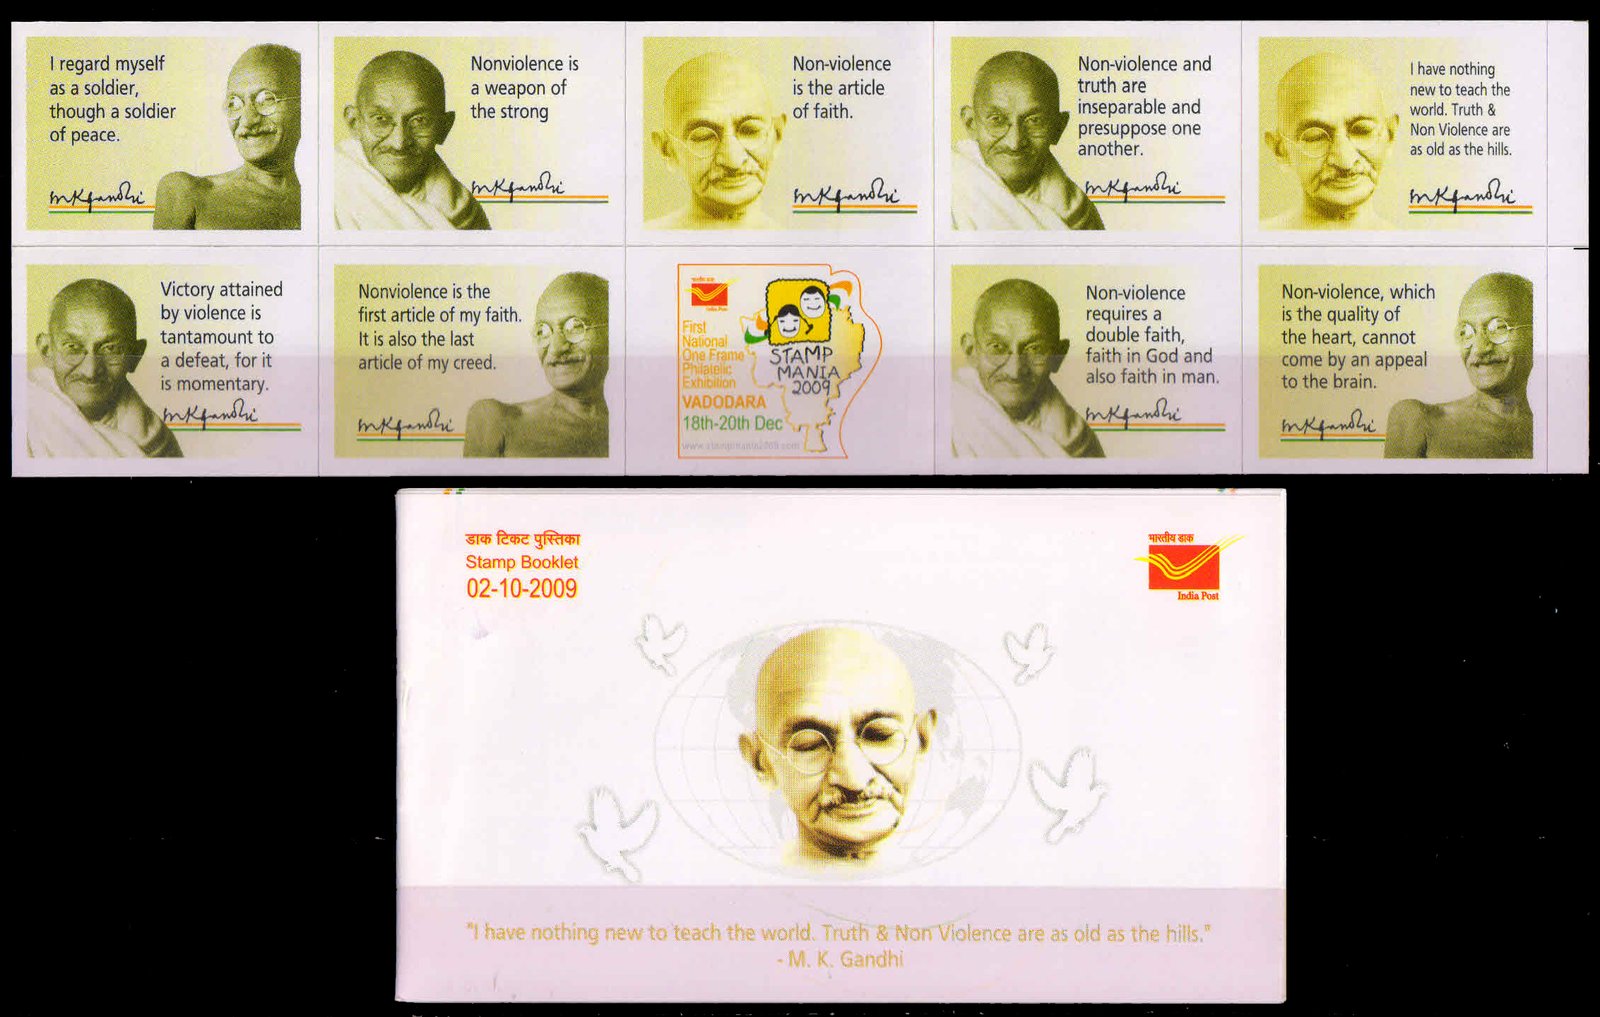 INDIA 2009-Mahatma Gandhi Stamp Booklet, Baroda Philatelic Society